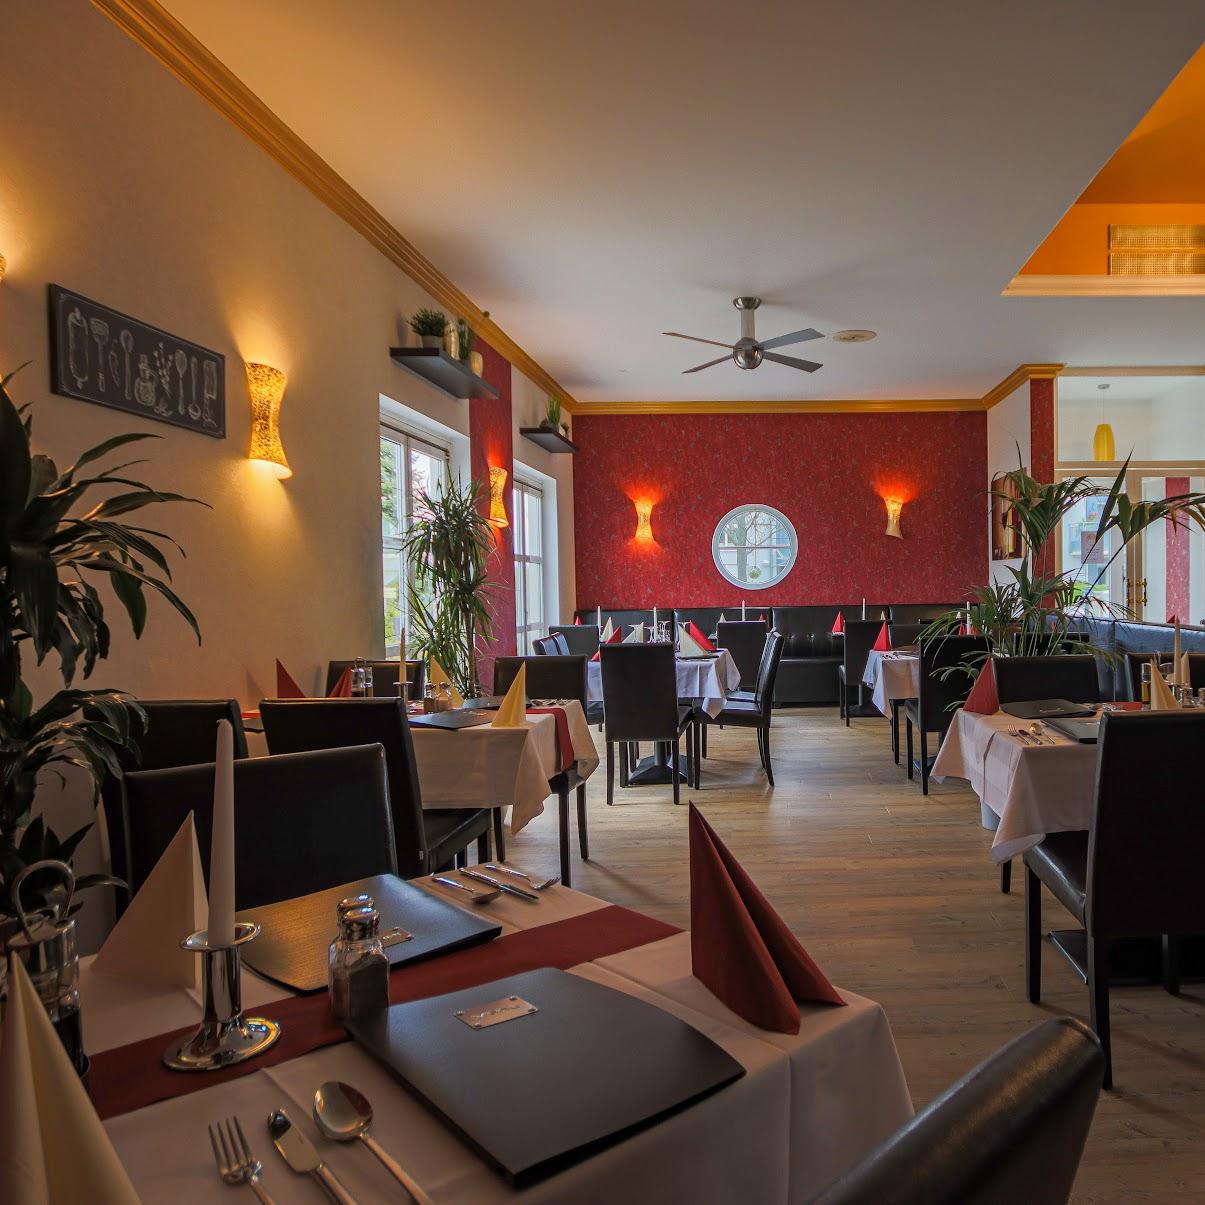 Restaurant "LA CUCINA" in Merseburg